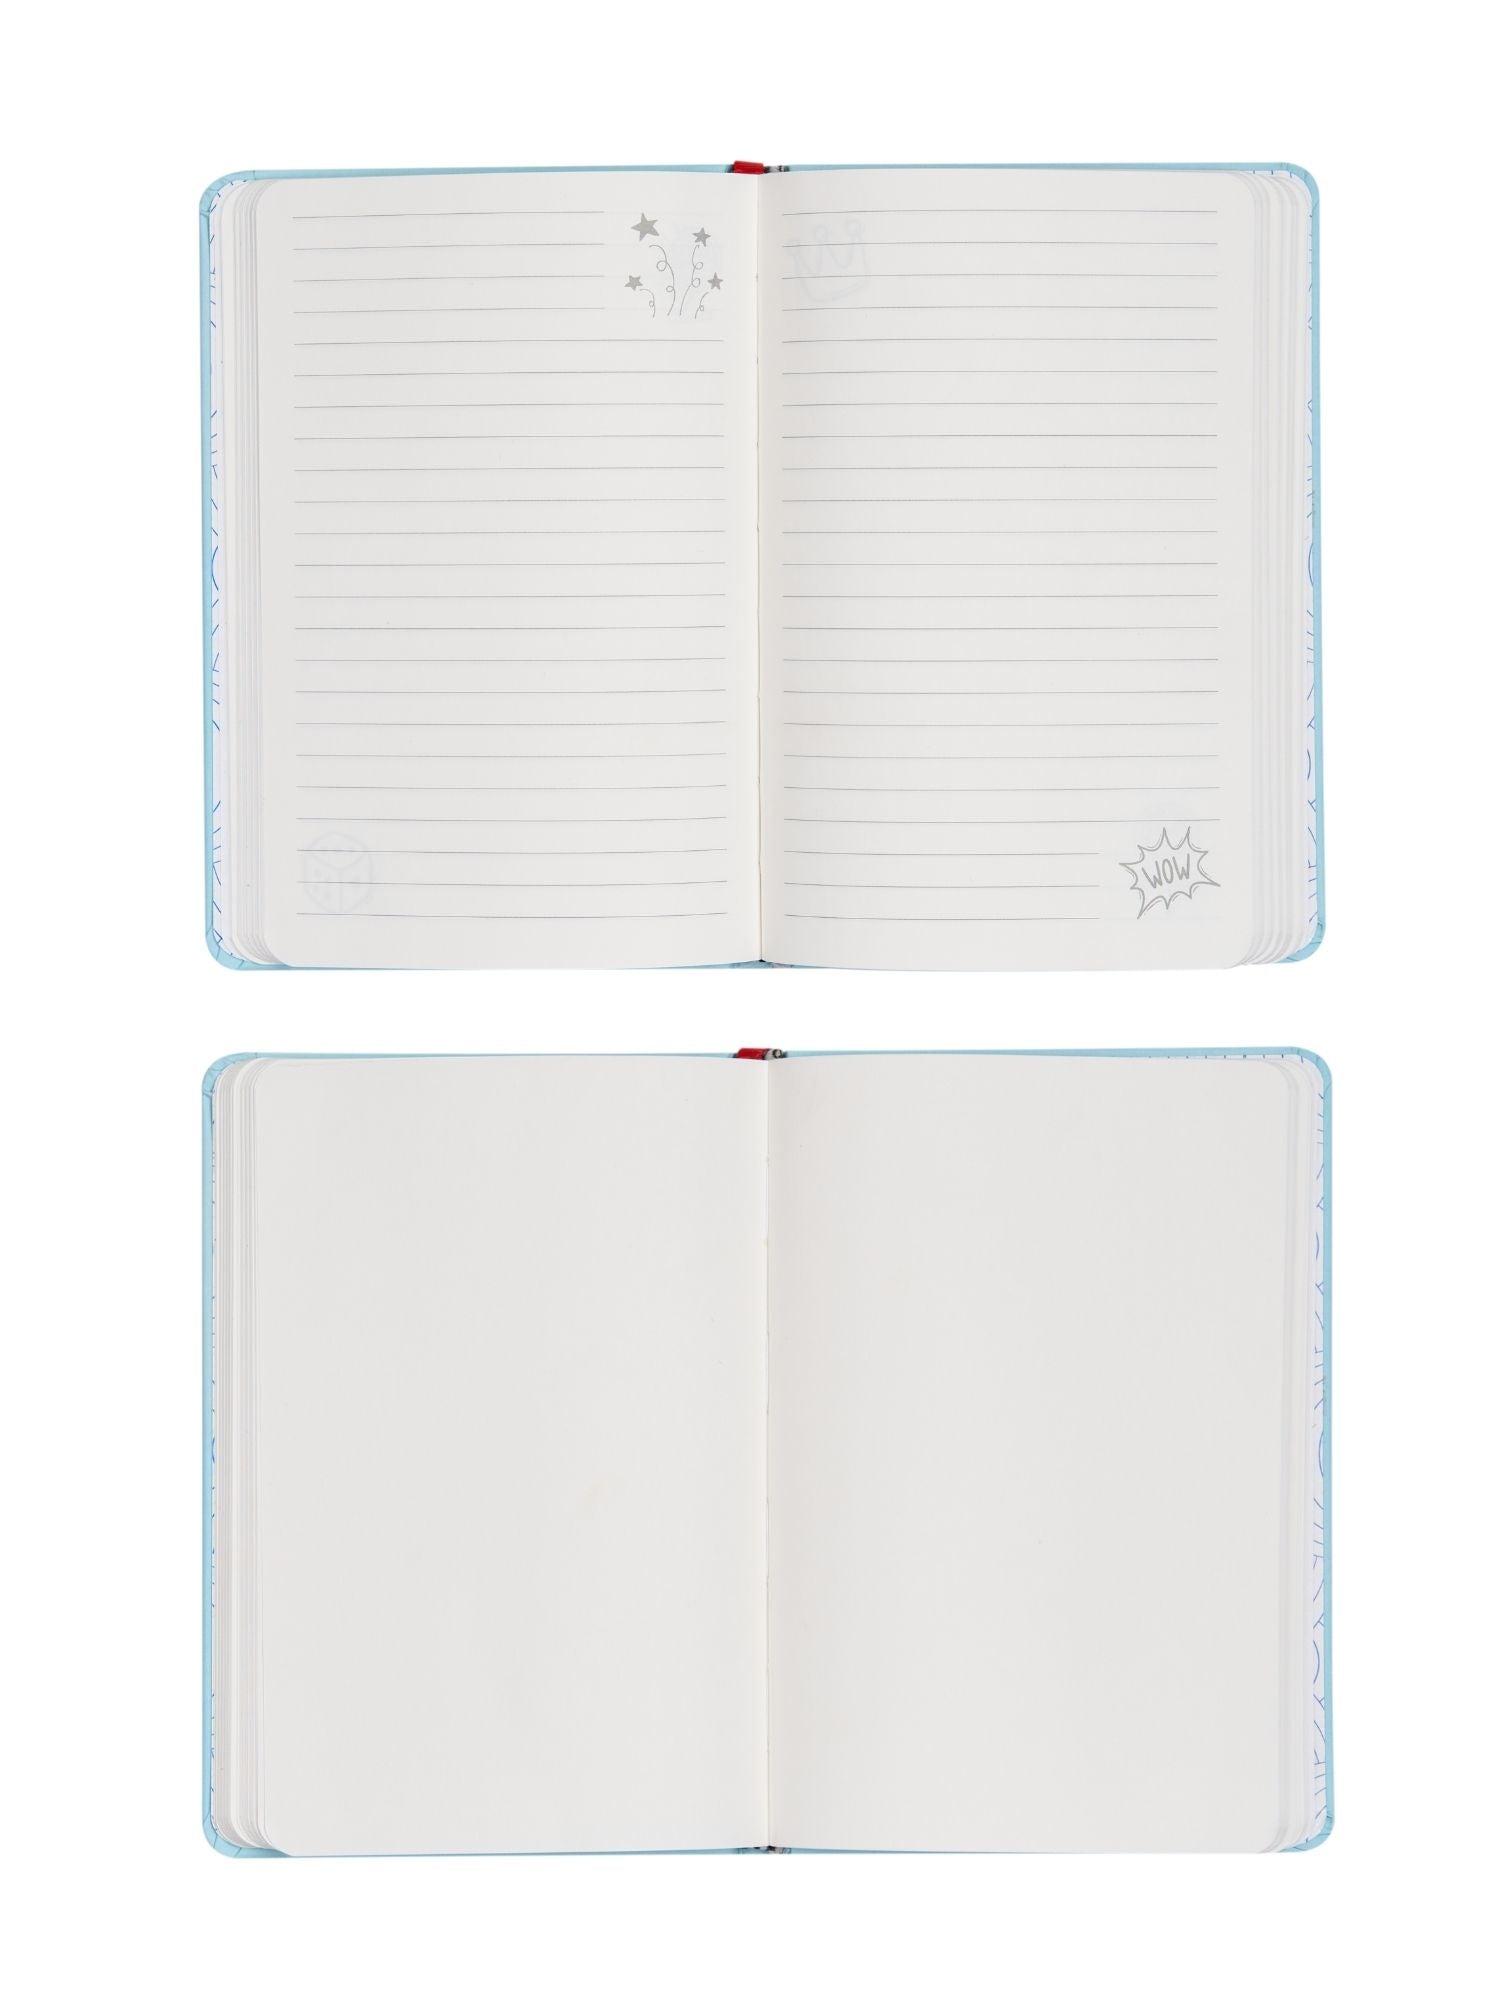 Doodle Initial E Stripes Theme Premium Hard Bound B6 Notebook Diary